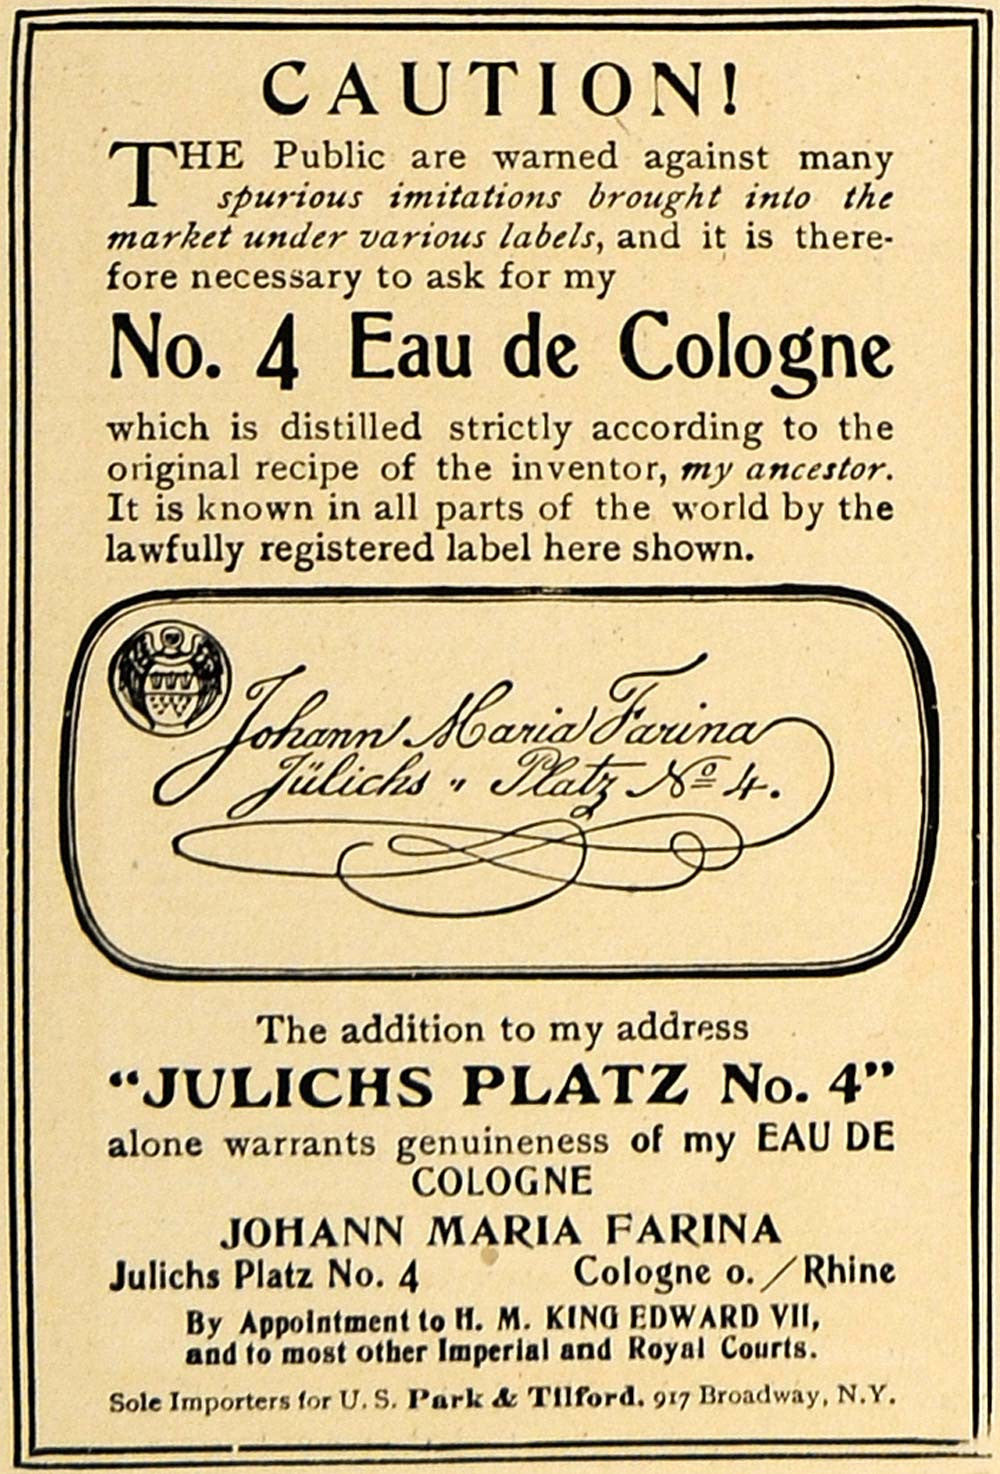 1907 Ad Johann Maria Farina Julichs Plats No.4 Cologne - ORIGINAL CL8 - Period Paper
